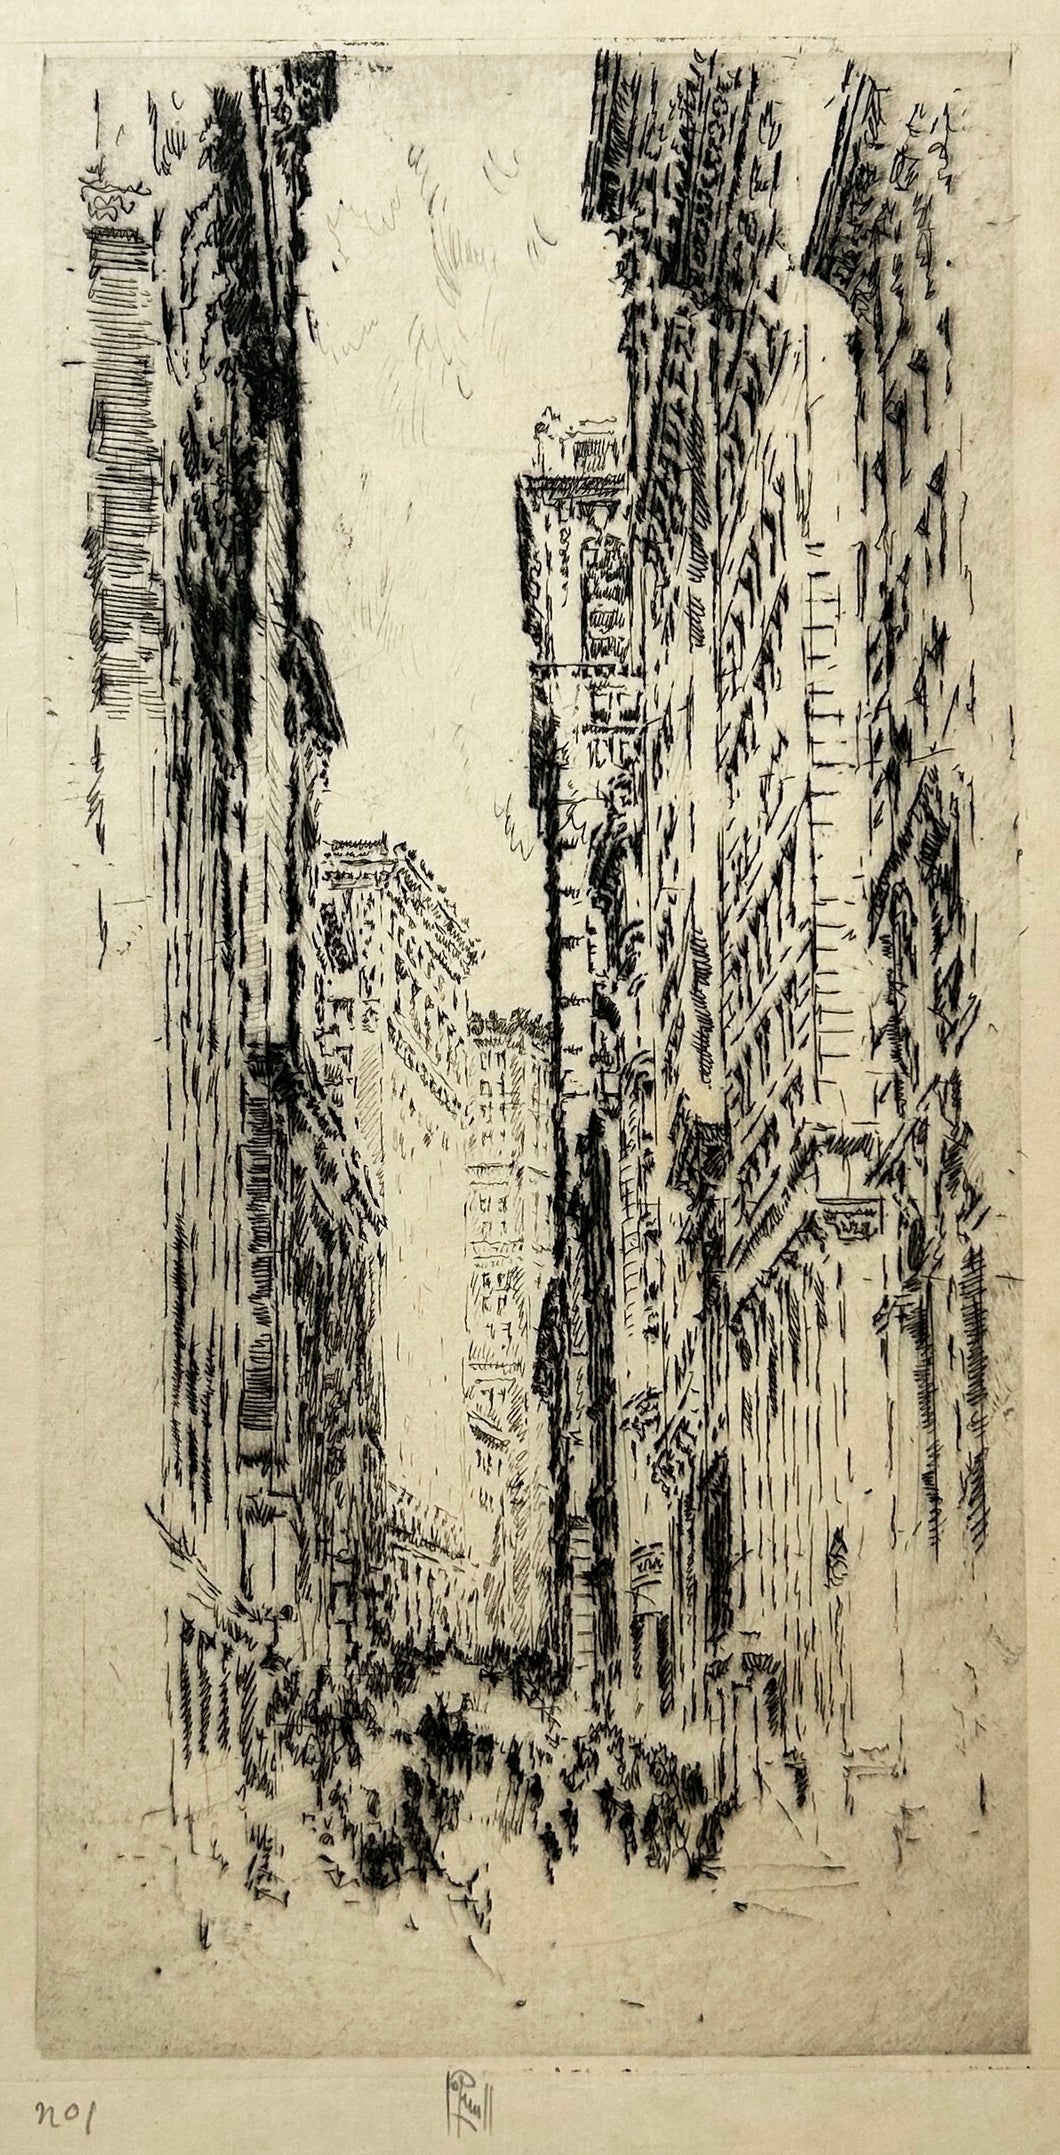 [William Street, New York].